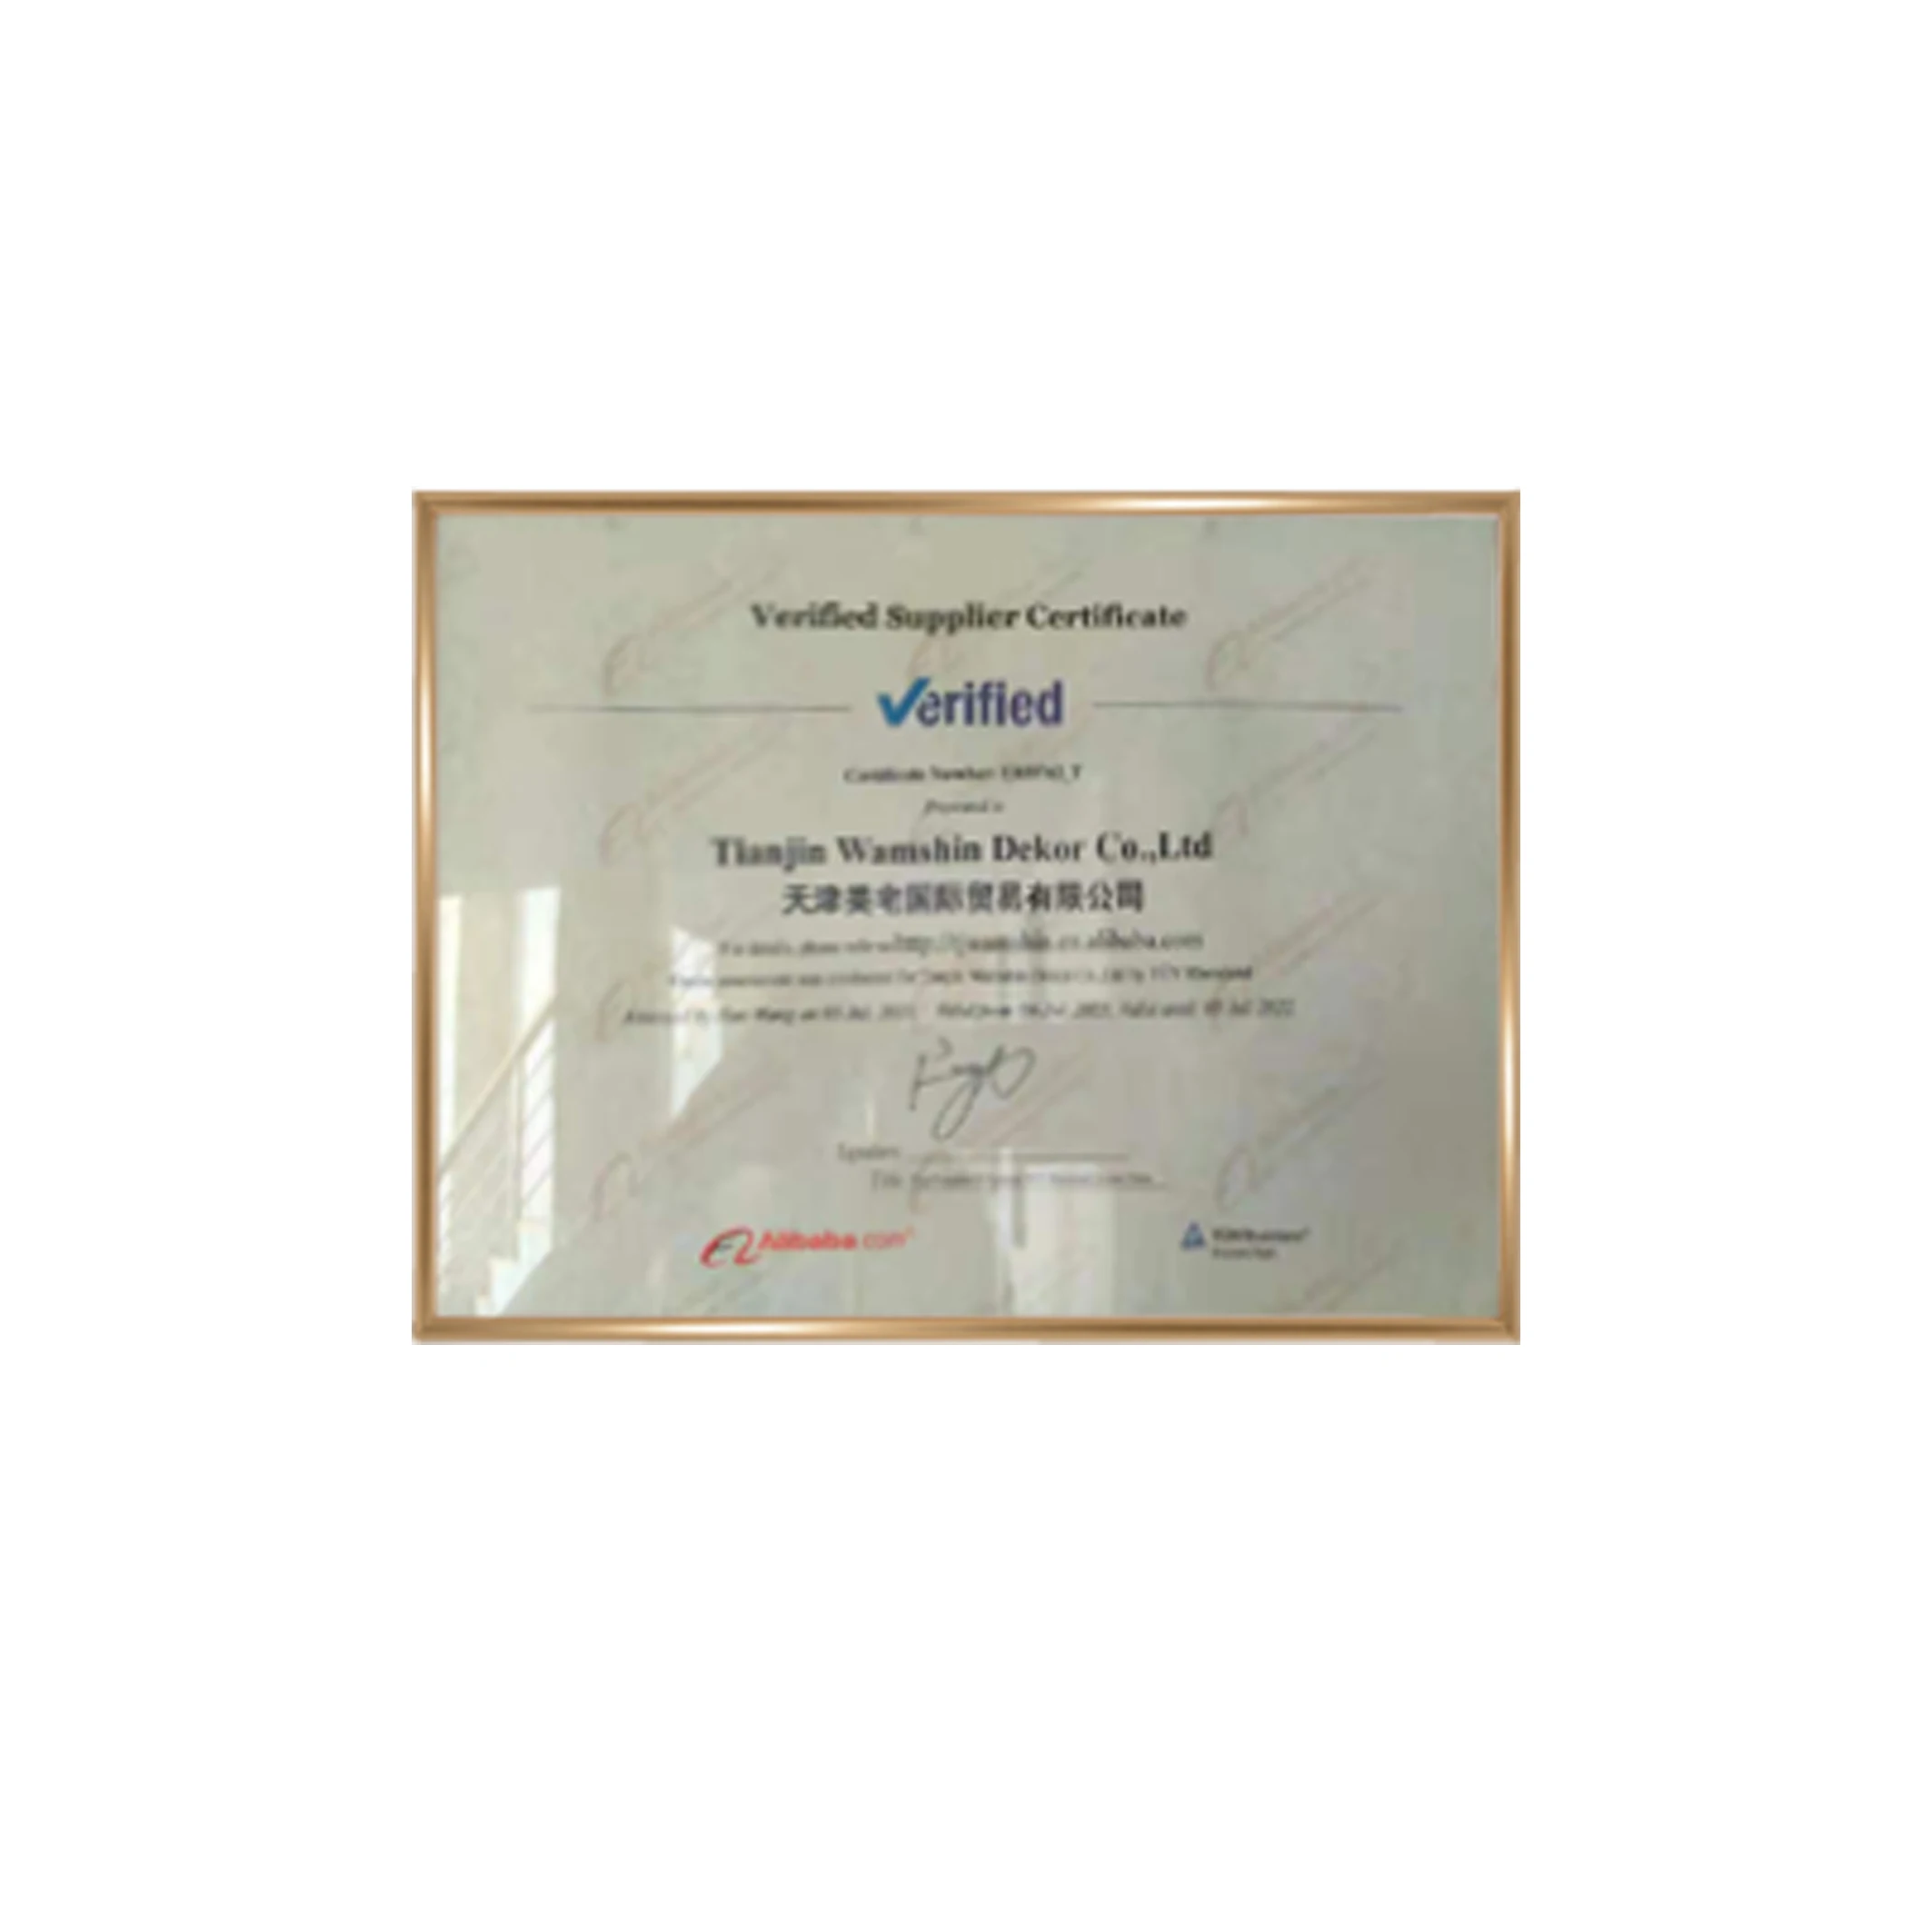 Wamshin gold frame 1.8 mm clear glass 2.5mm mdf board A3 metal aluminum picture certificate frame (1600335475516)